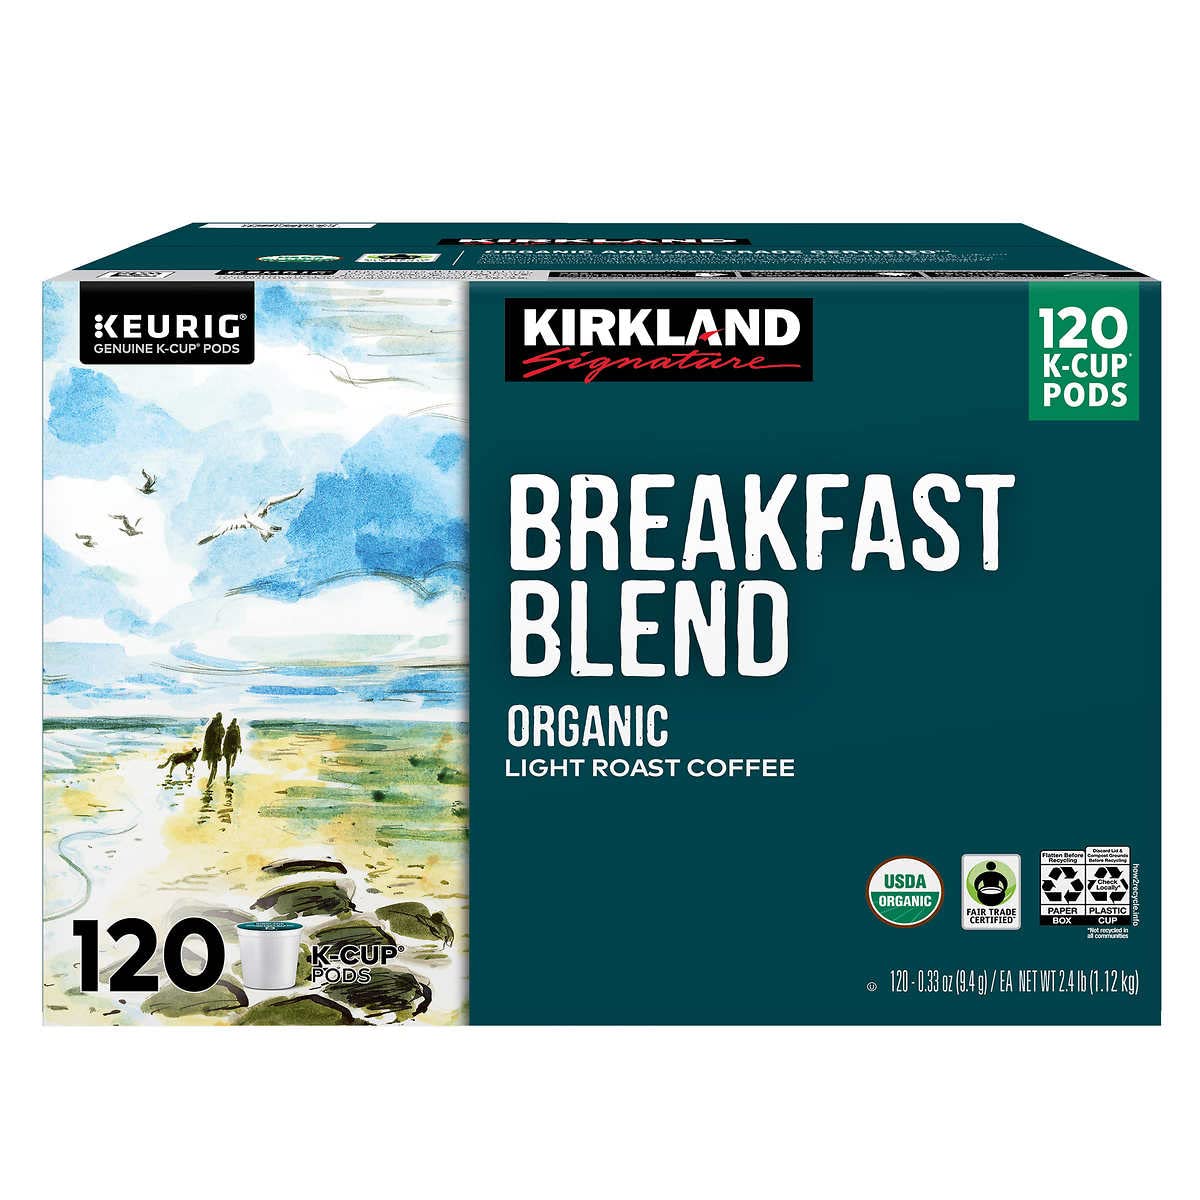 Kirkland Signature Organic Breakfast Blend Light-Roast Coffee, K-Cup Pods, 120 Count $31.99